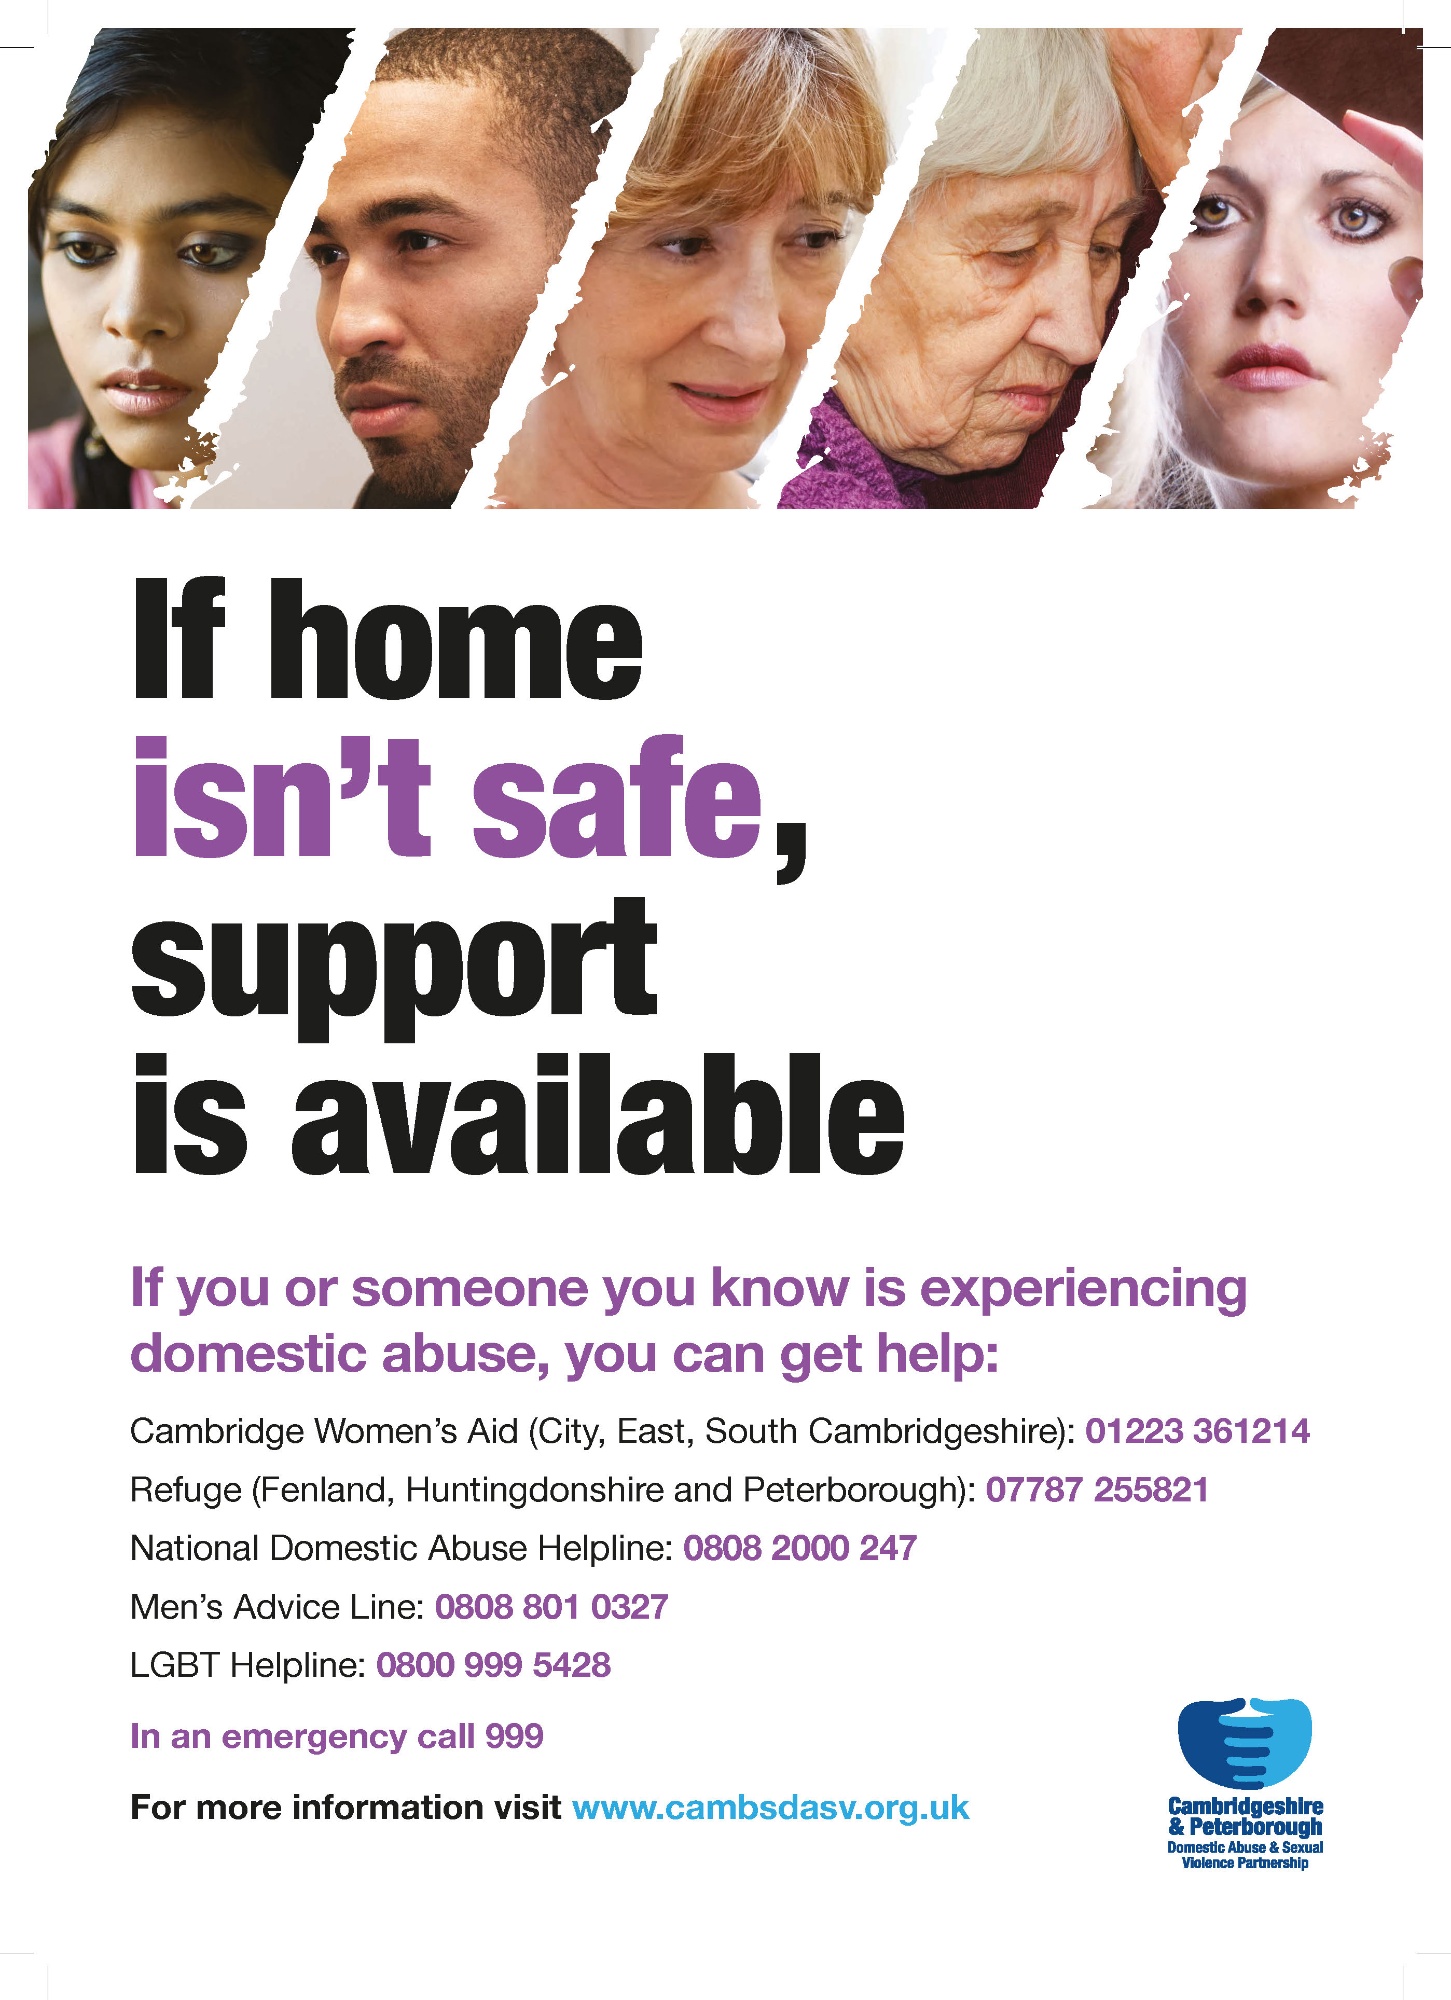 Covid-19 Domestic Abuse - Support